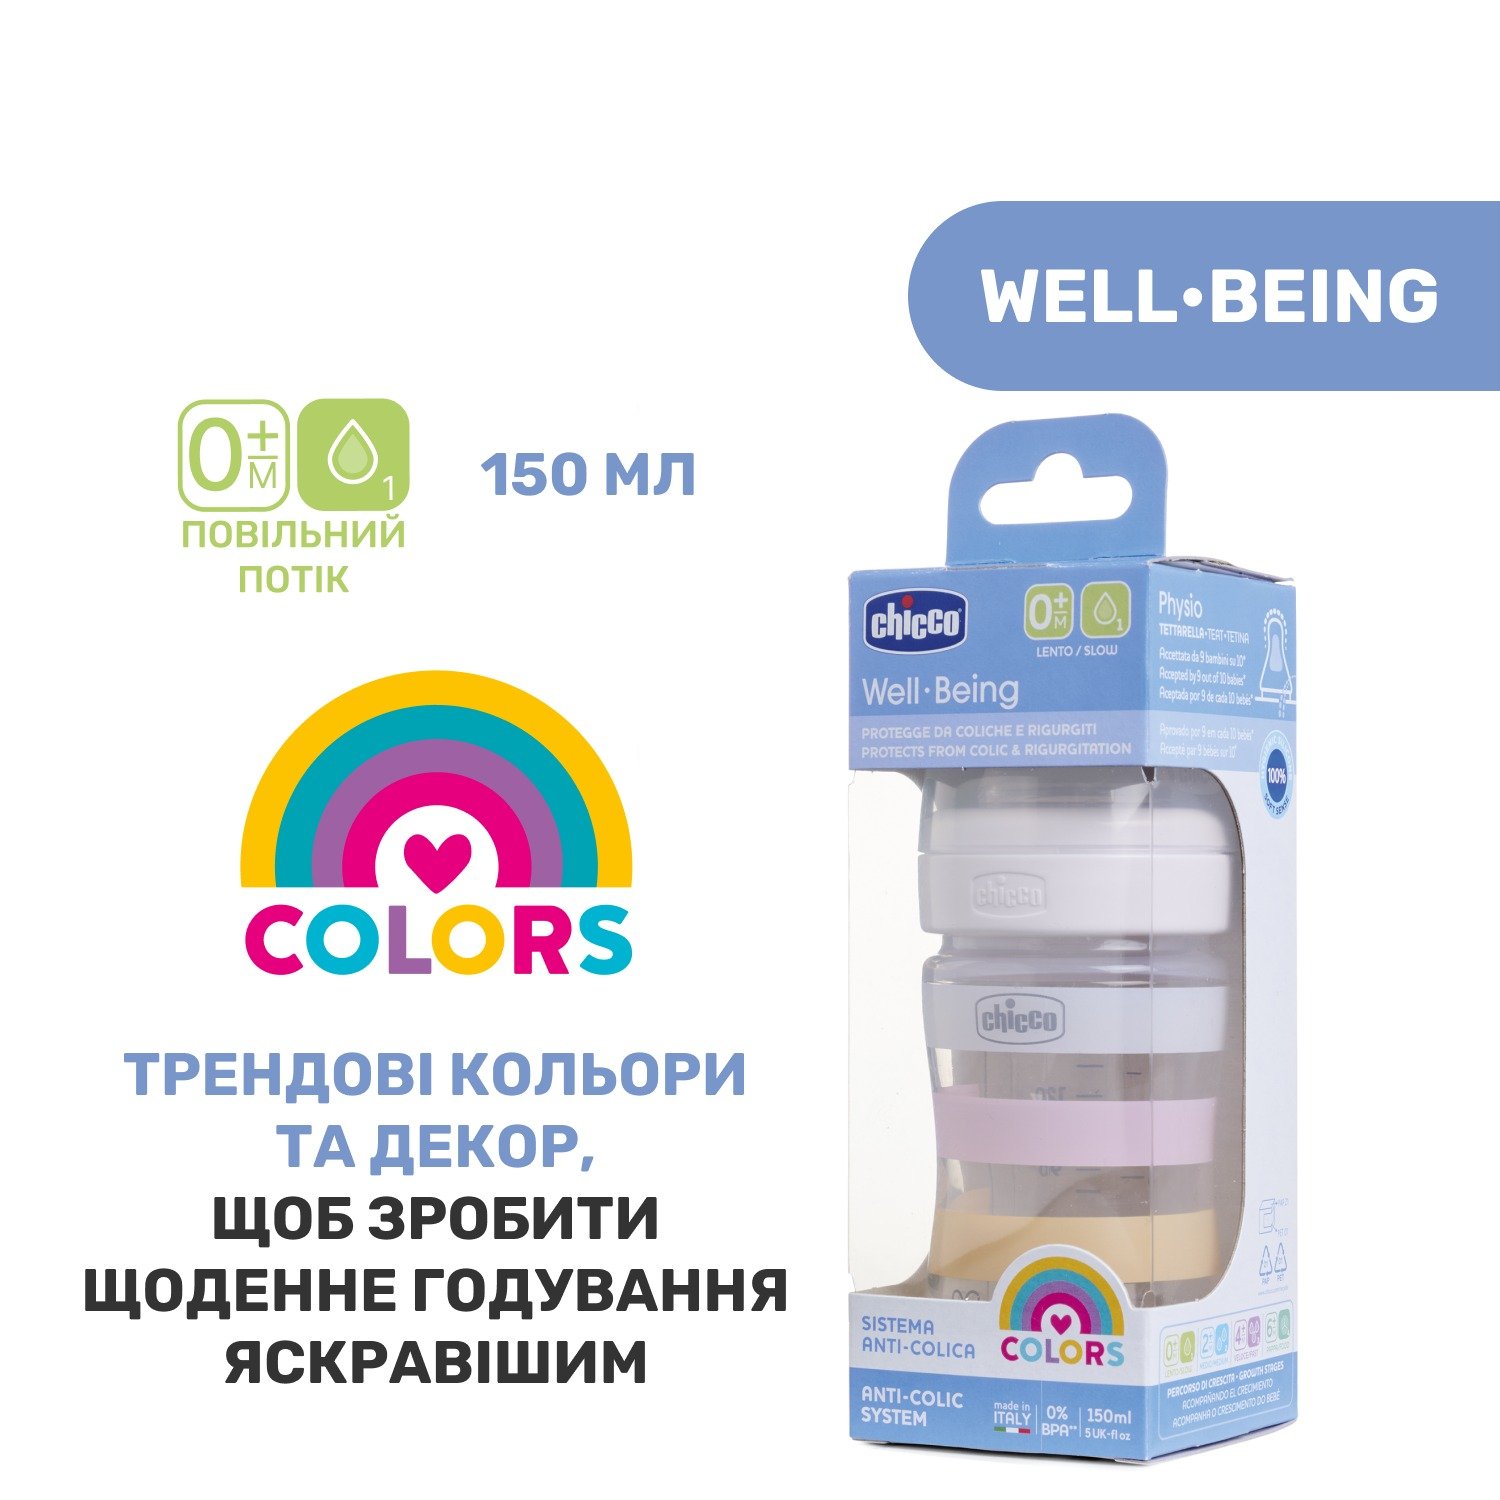 Пляшечка для годування Chicco Well-Being Colors, з силіконовою соскою 0м+, 150 мл, рожева (28611.11) - фото 8